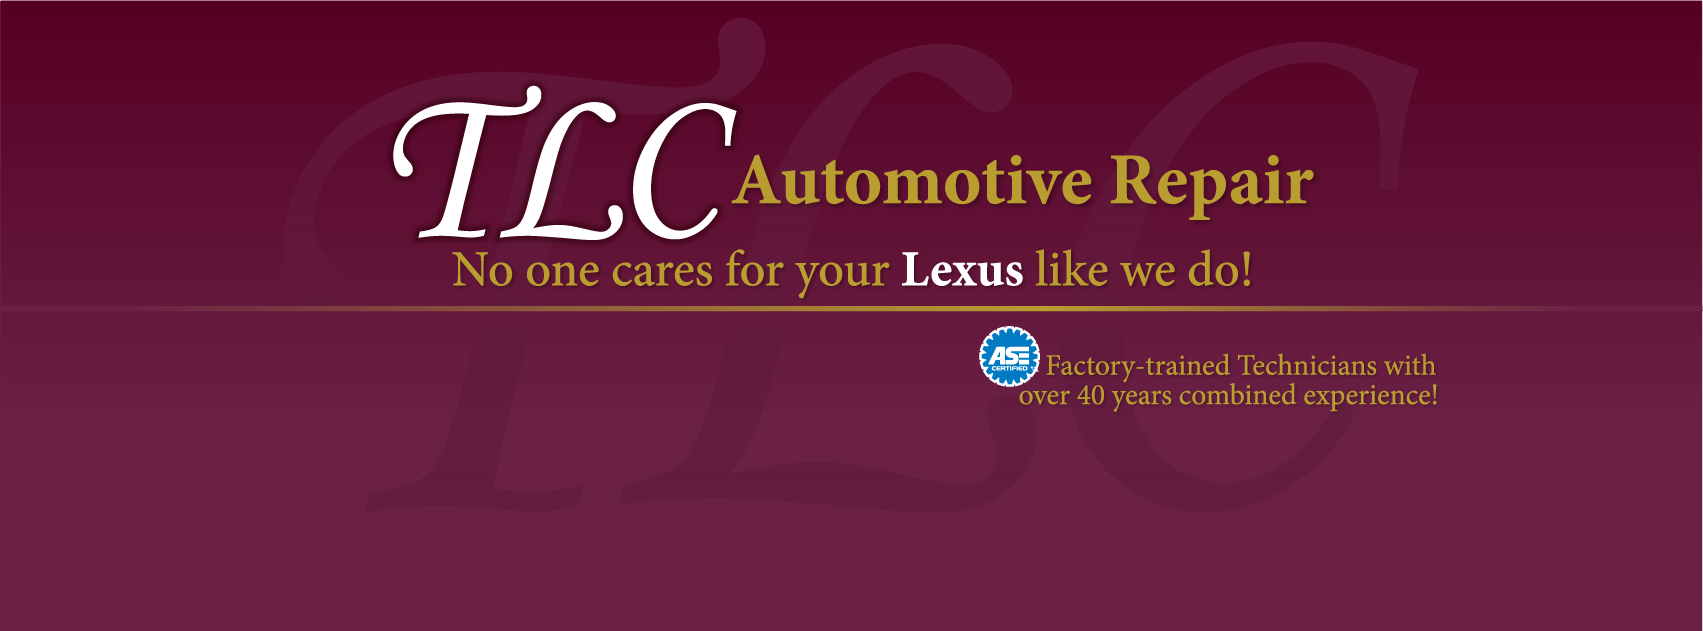 TLC Automotive Repair, Inc.